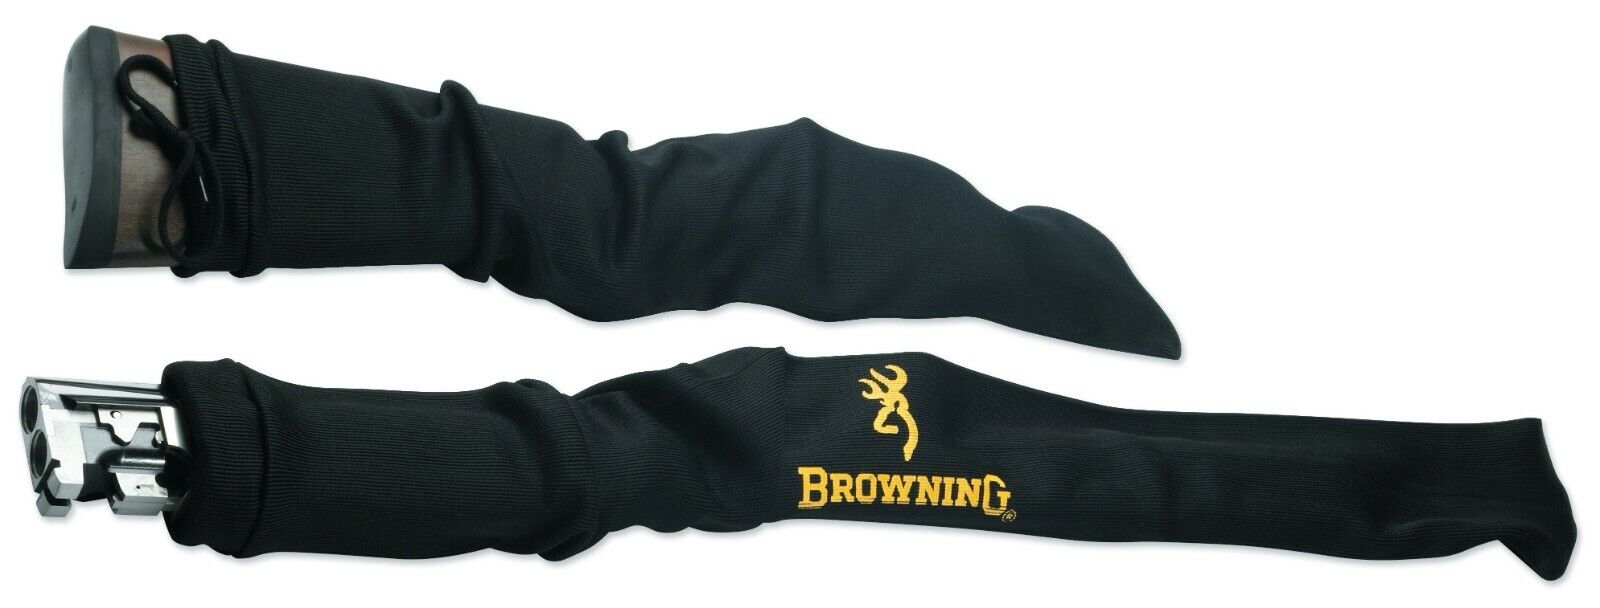 Browning VCI (Vapor Corrosion Inhibitor) Gun Sock 2-piece - Black - 149986 NEW